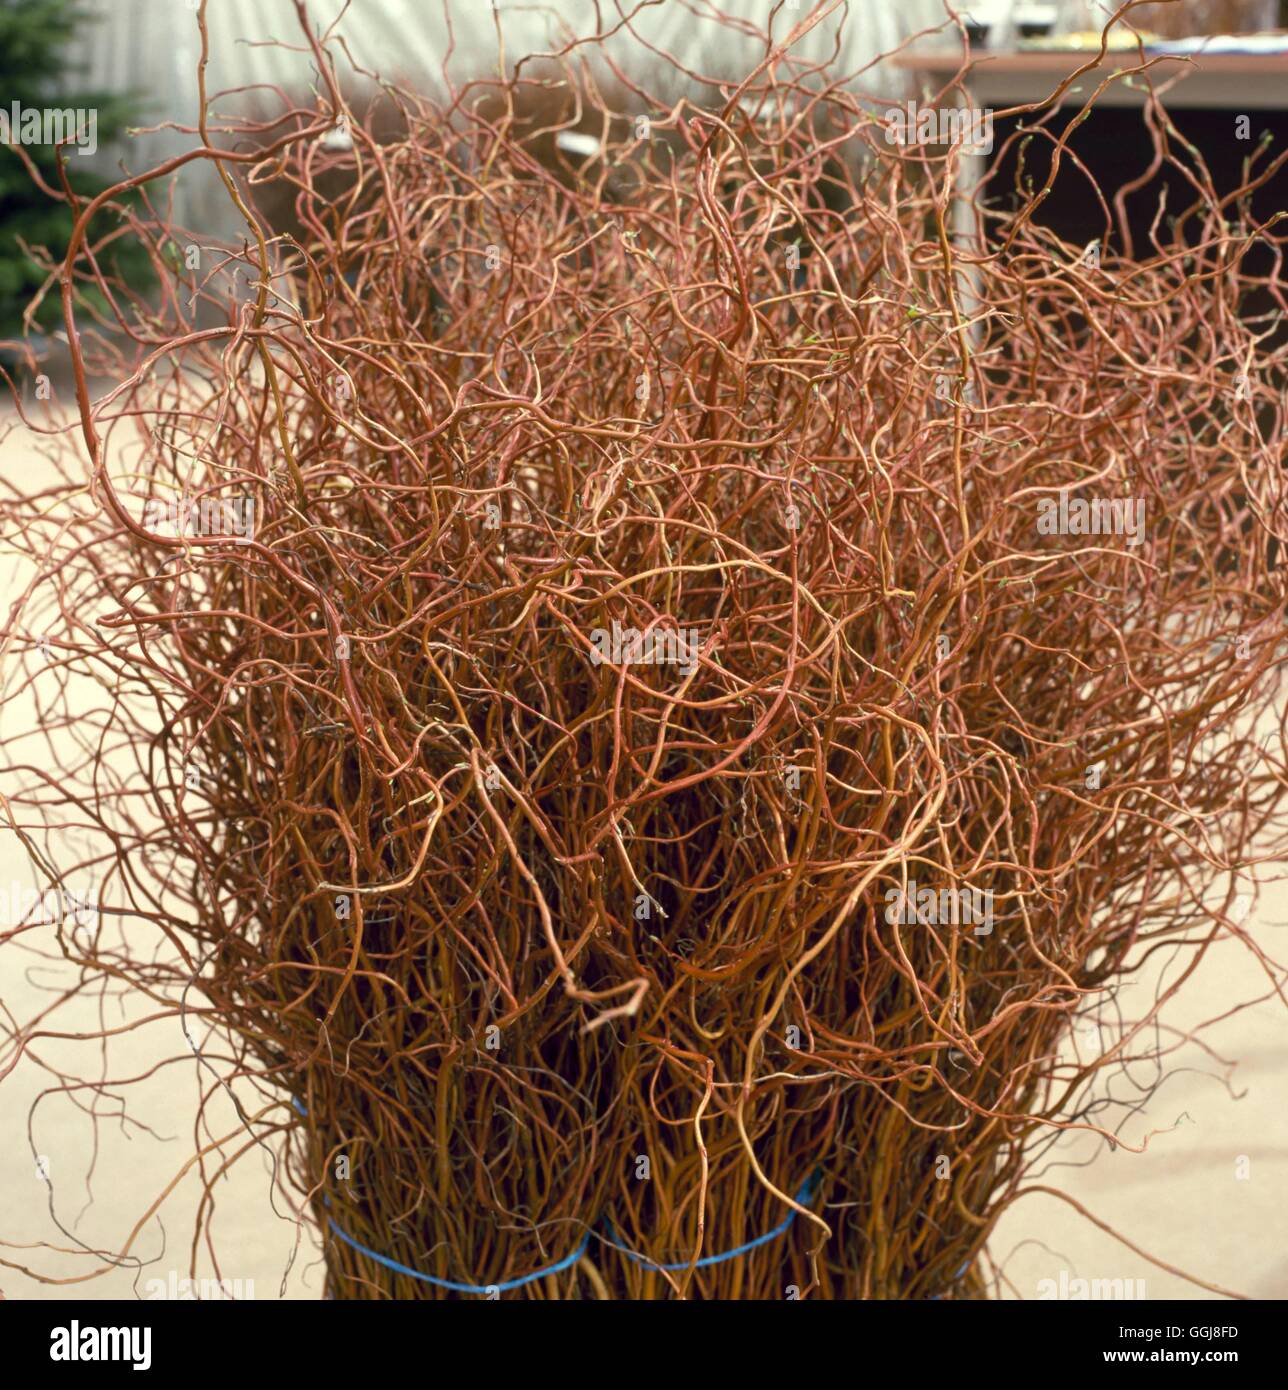 Flower Arrangements/Cut Flowers - Tortured Willow (Salix sp.) prepared for floristry use.'''''   FAR099006  Compuls' Stock Photo